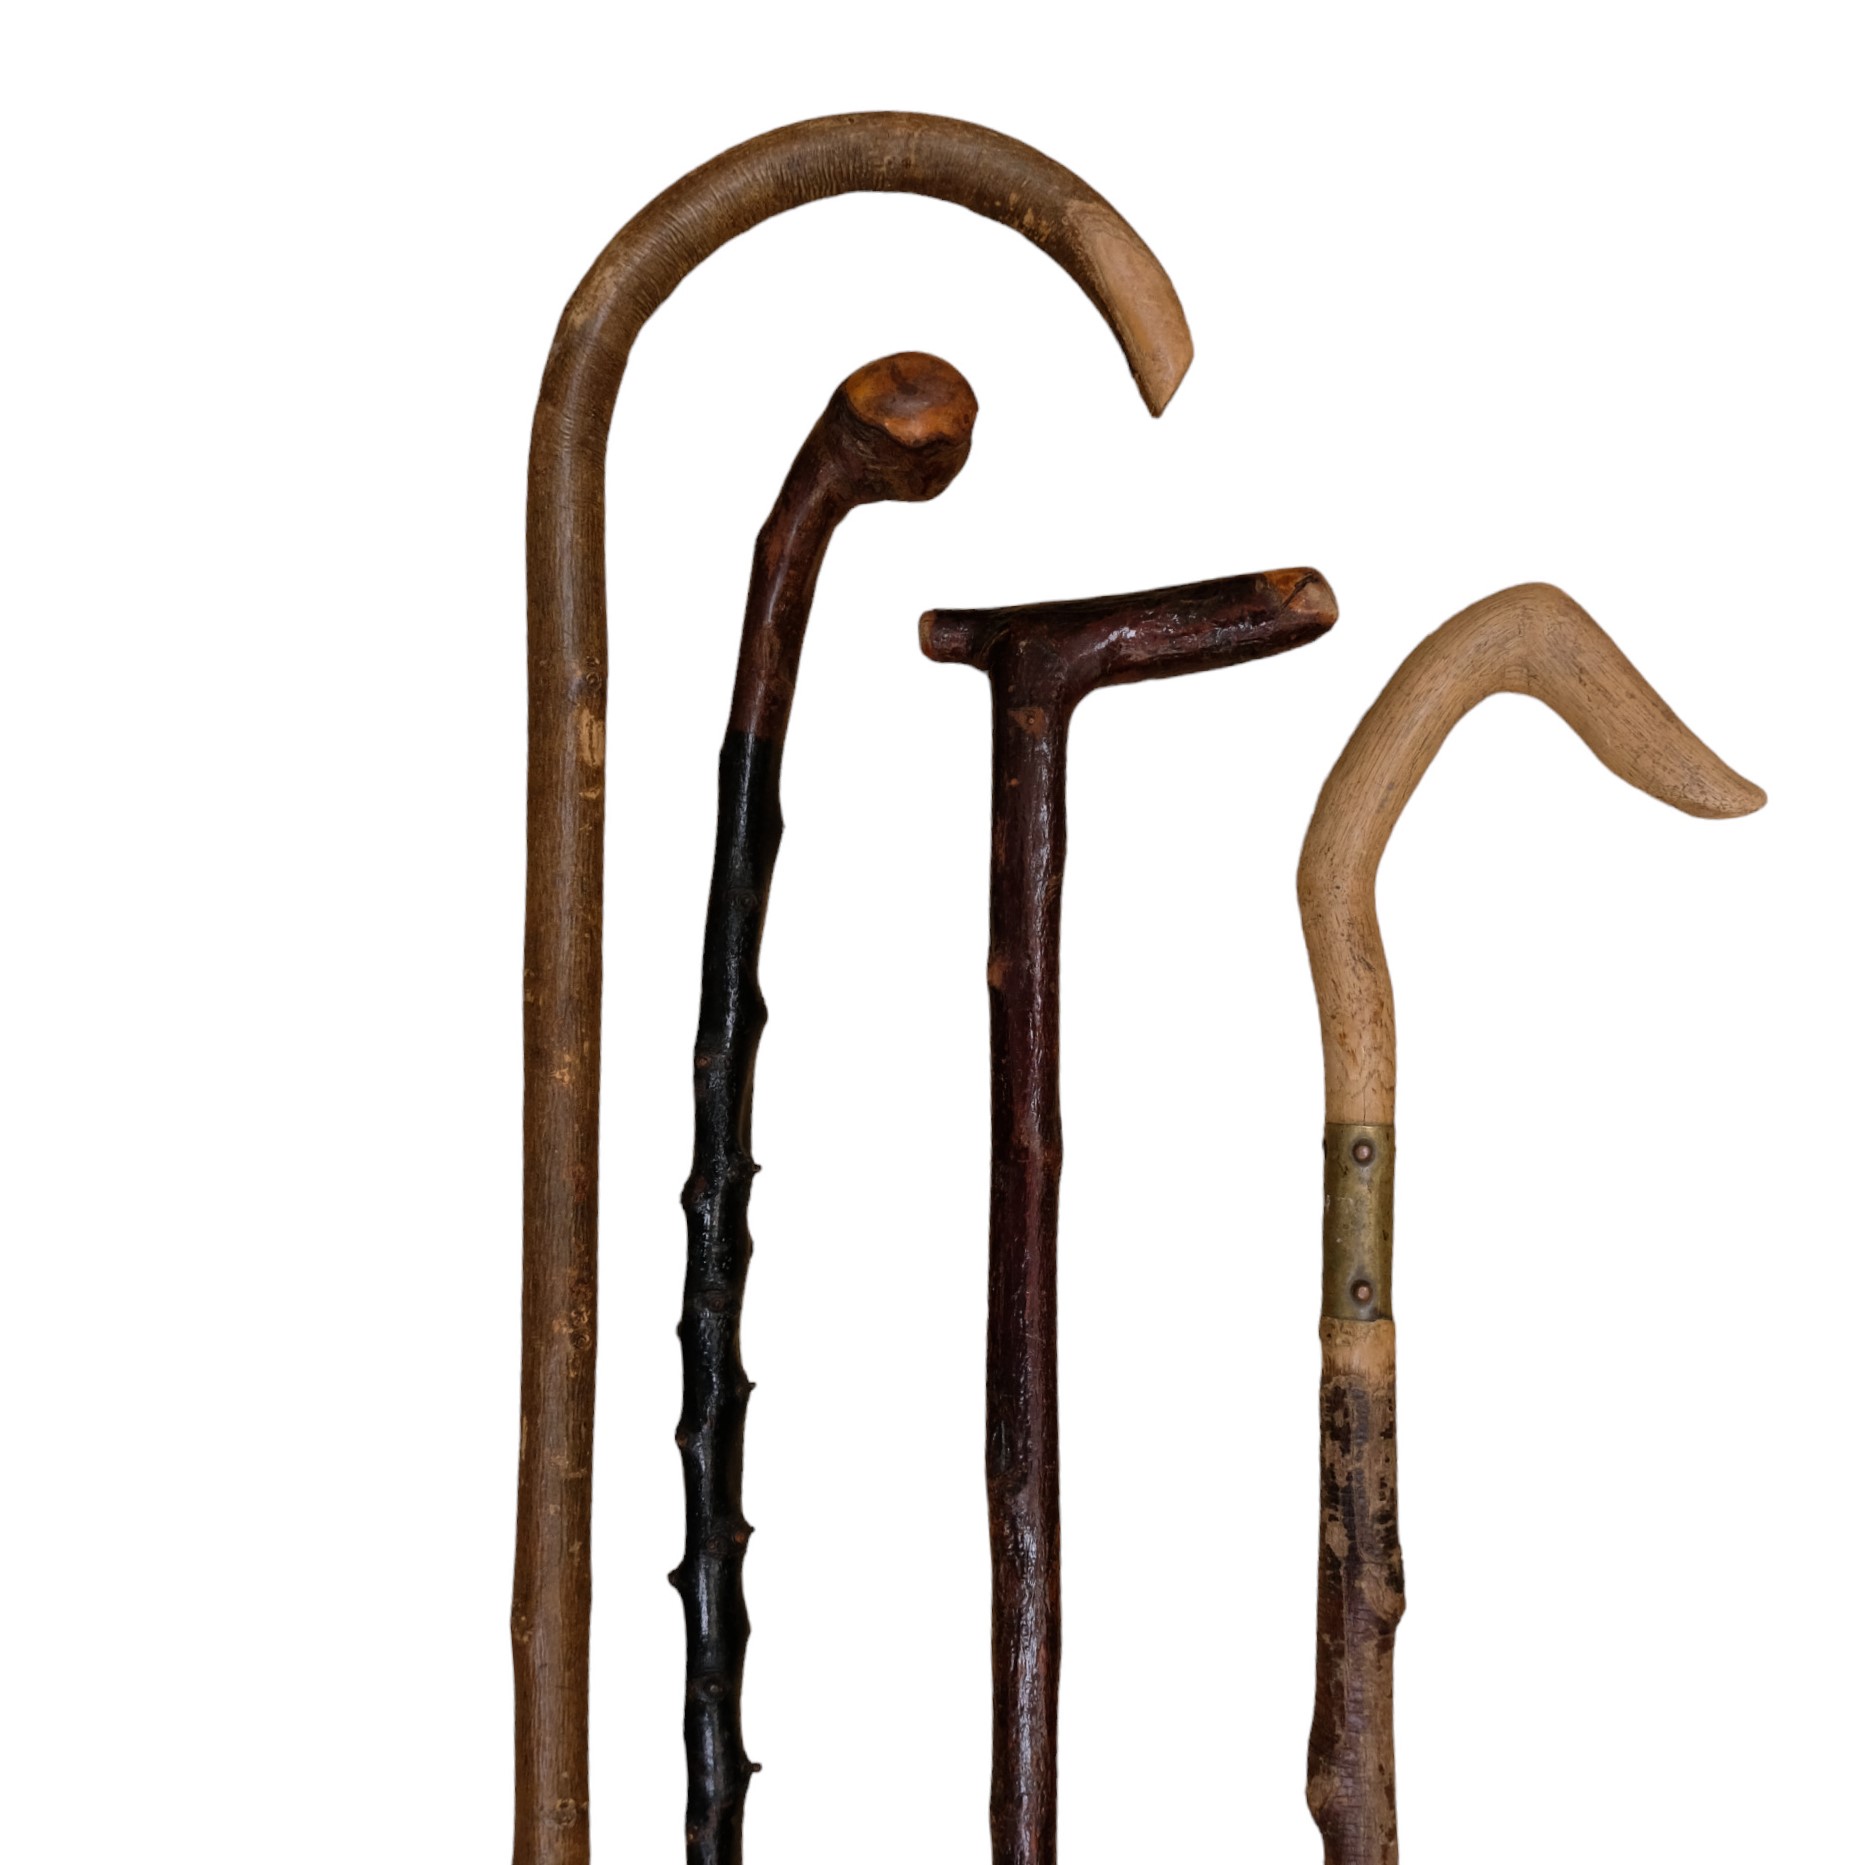 Four rustic wooden walking sticks - Image 2 of 2